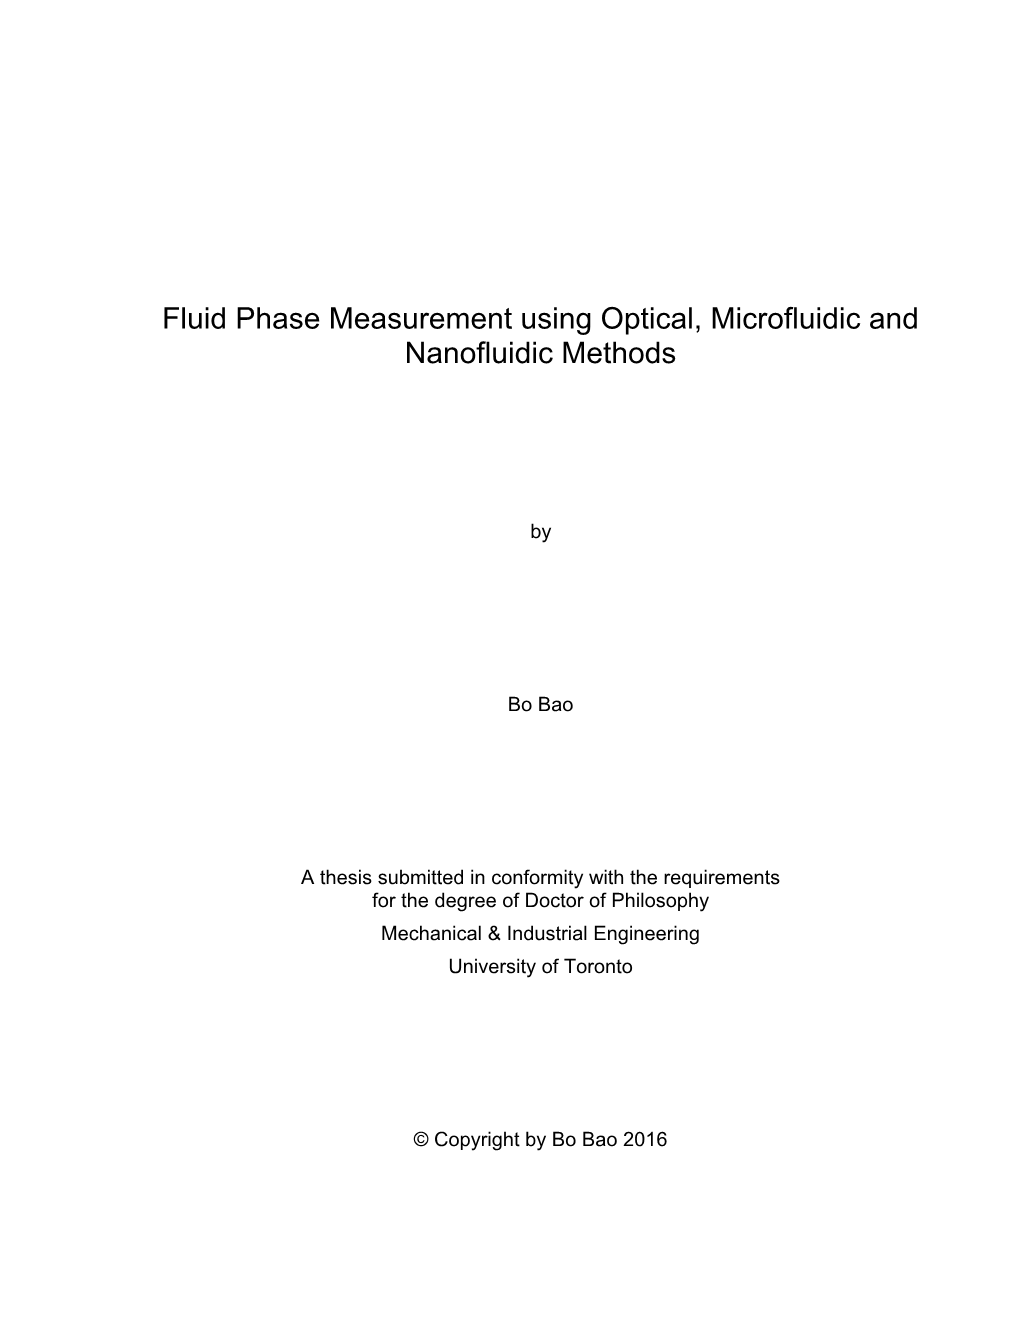 Fluid Phase Measurement Using Optical, Microfluidic and Nanofluidic Methods